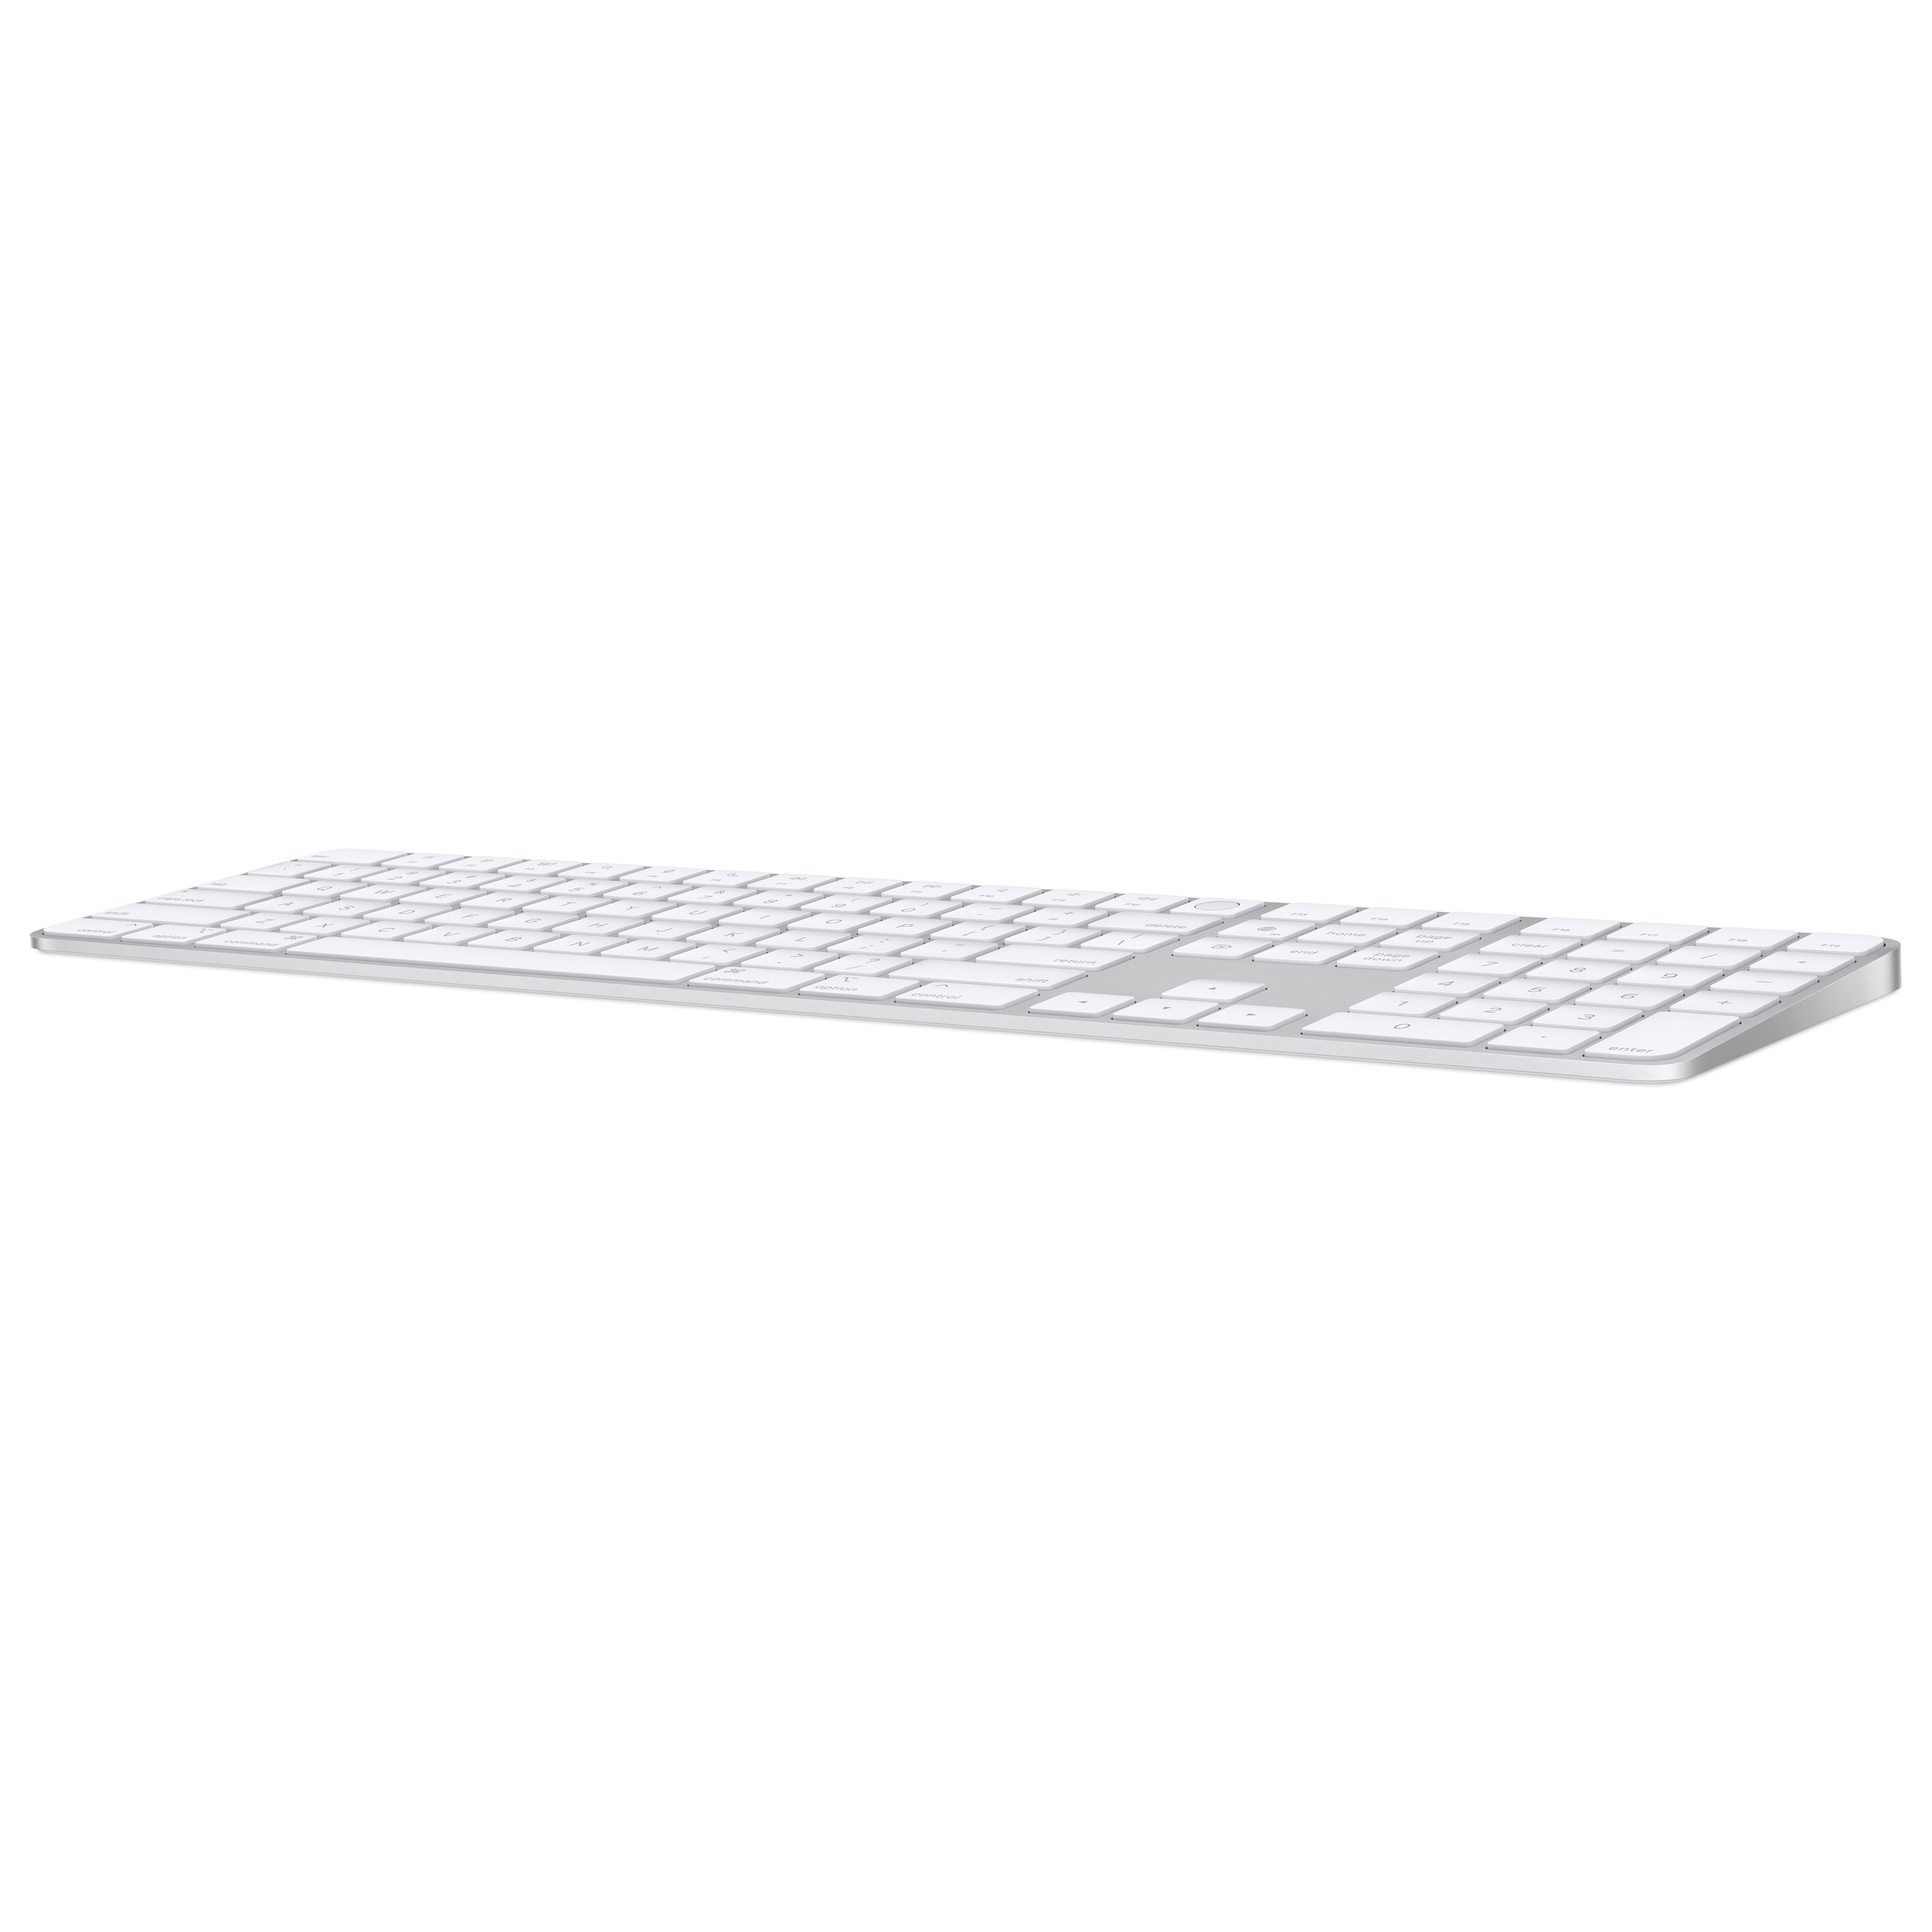 Apple Magic Keyboard with Touch ID and Numeric Keypad - Tastatur - Bluetooth, USB-C - QWERTY - Spanisch - für iMac (Anfang 2021)